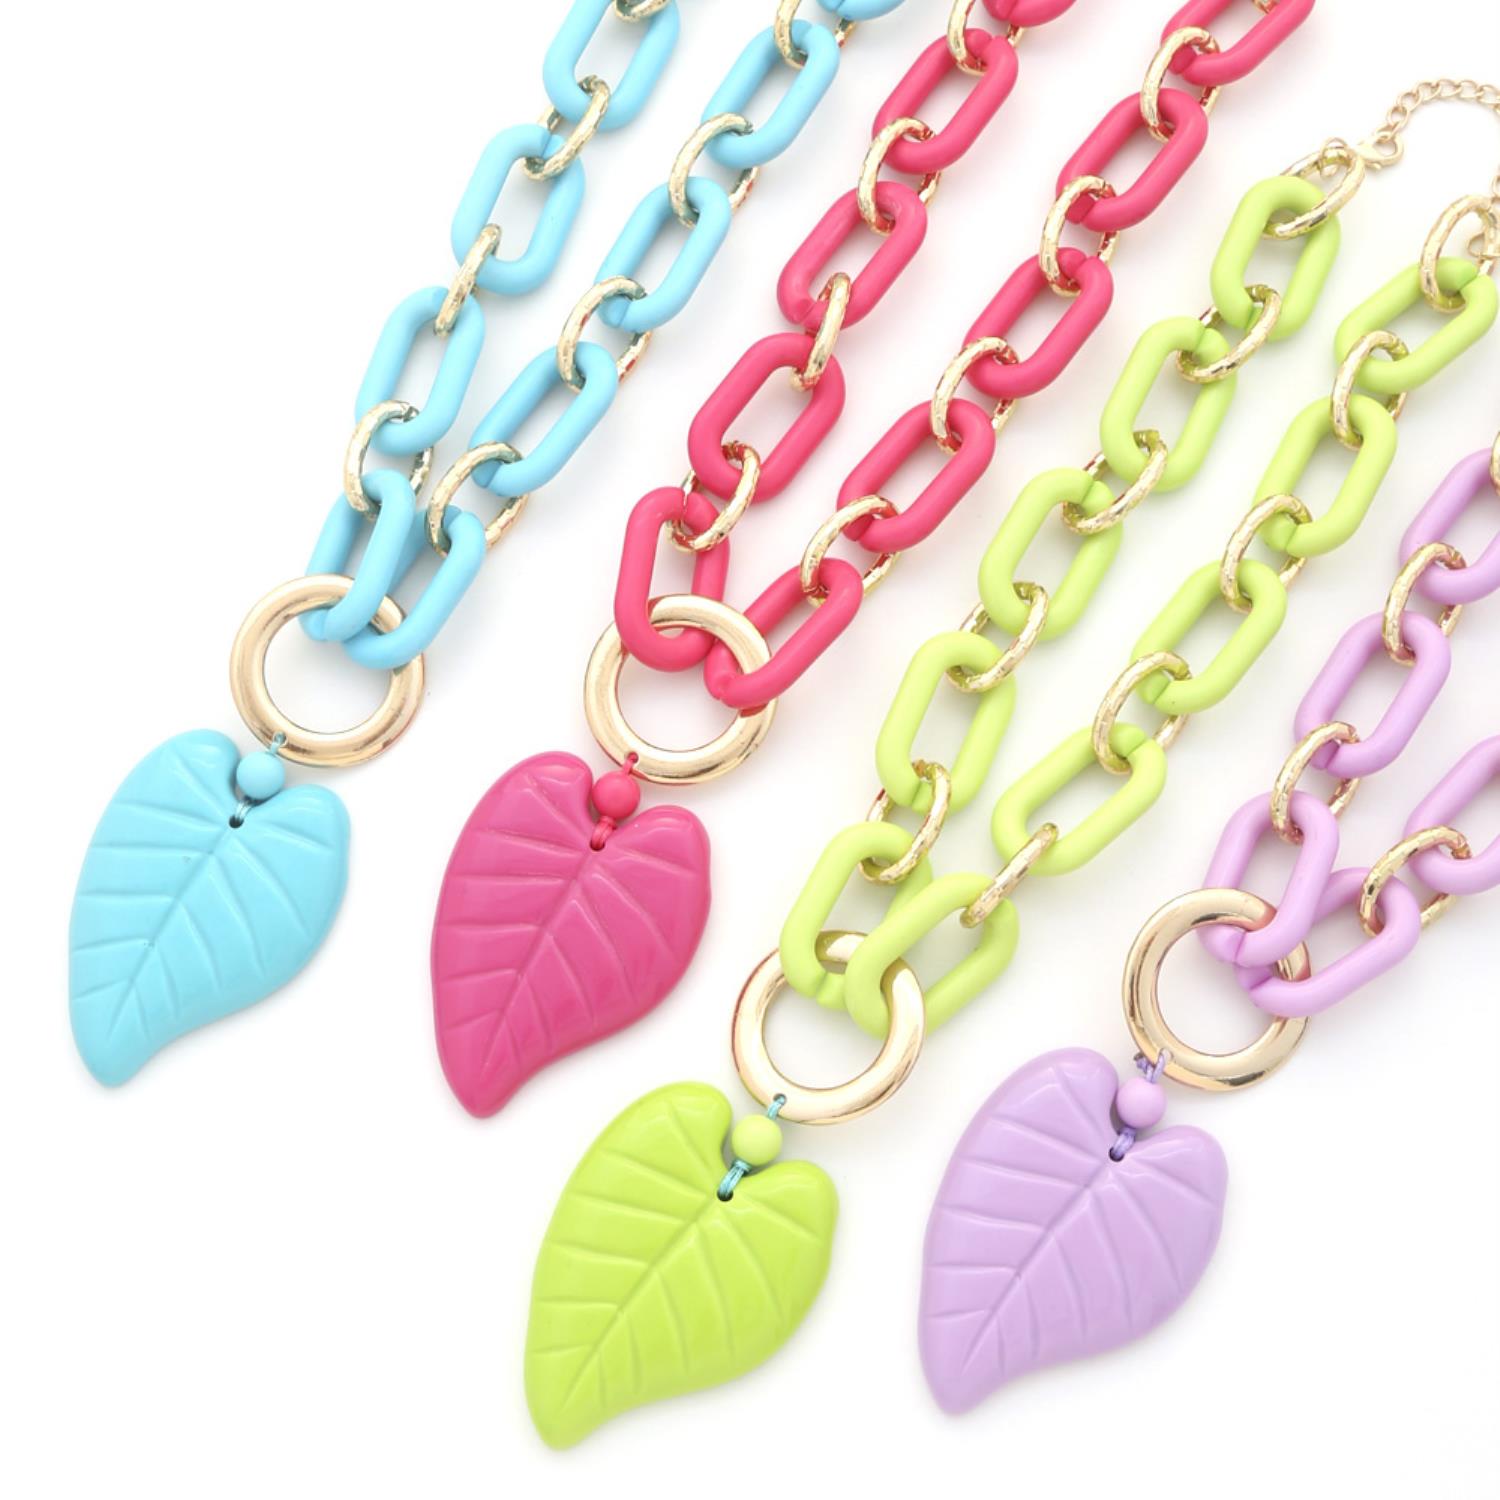 Chunky Color Acrylic Leaf Pendant Necklace Naughty Smile Fashion